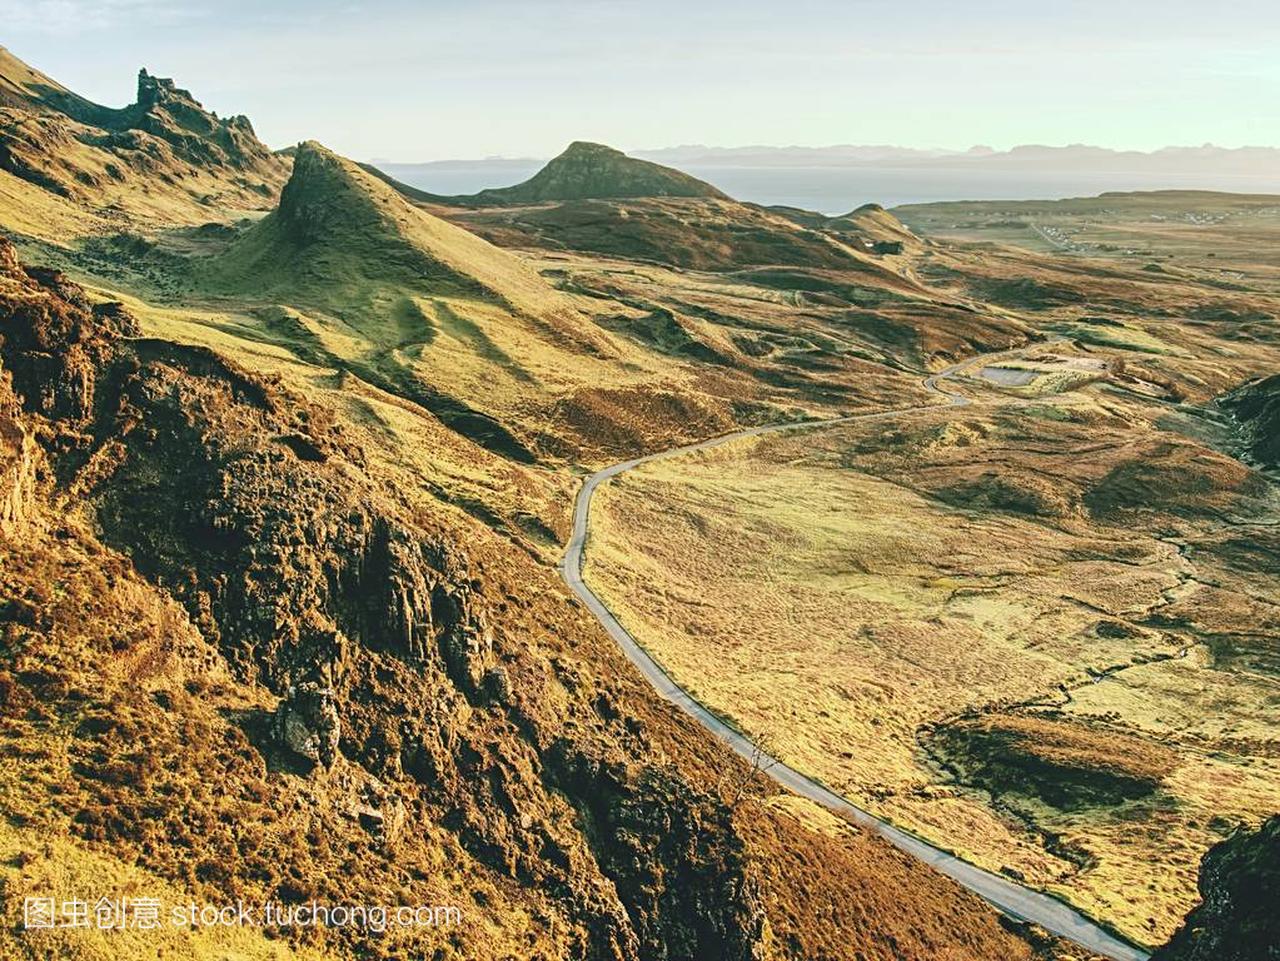 Quiraing 山日落在斯凯岛, 苏格兰高地。旅游徒